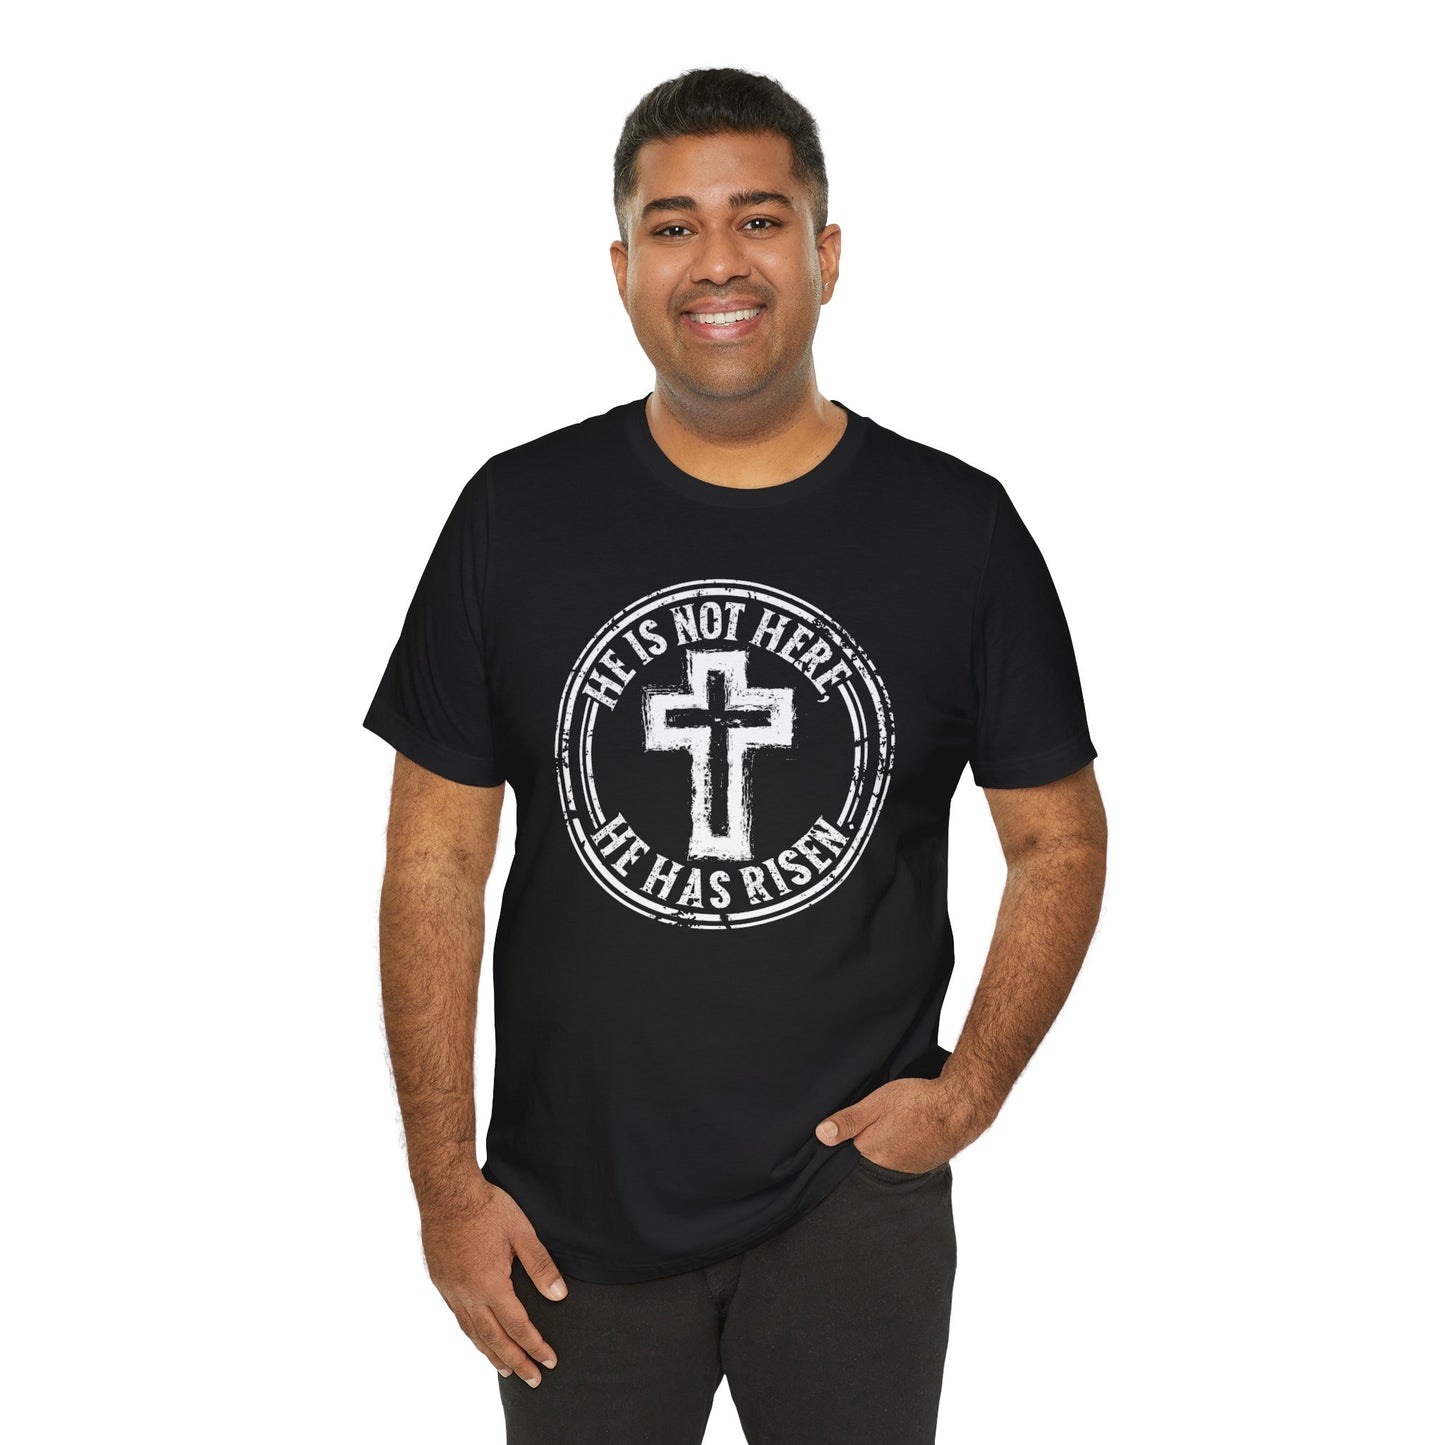 He Is Not Here He Has Risen Christian Faith Shirt